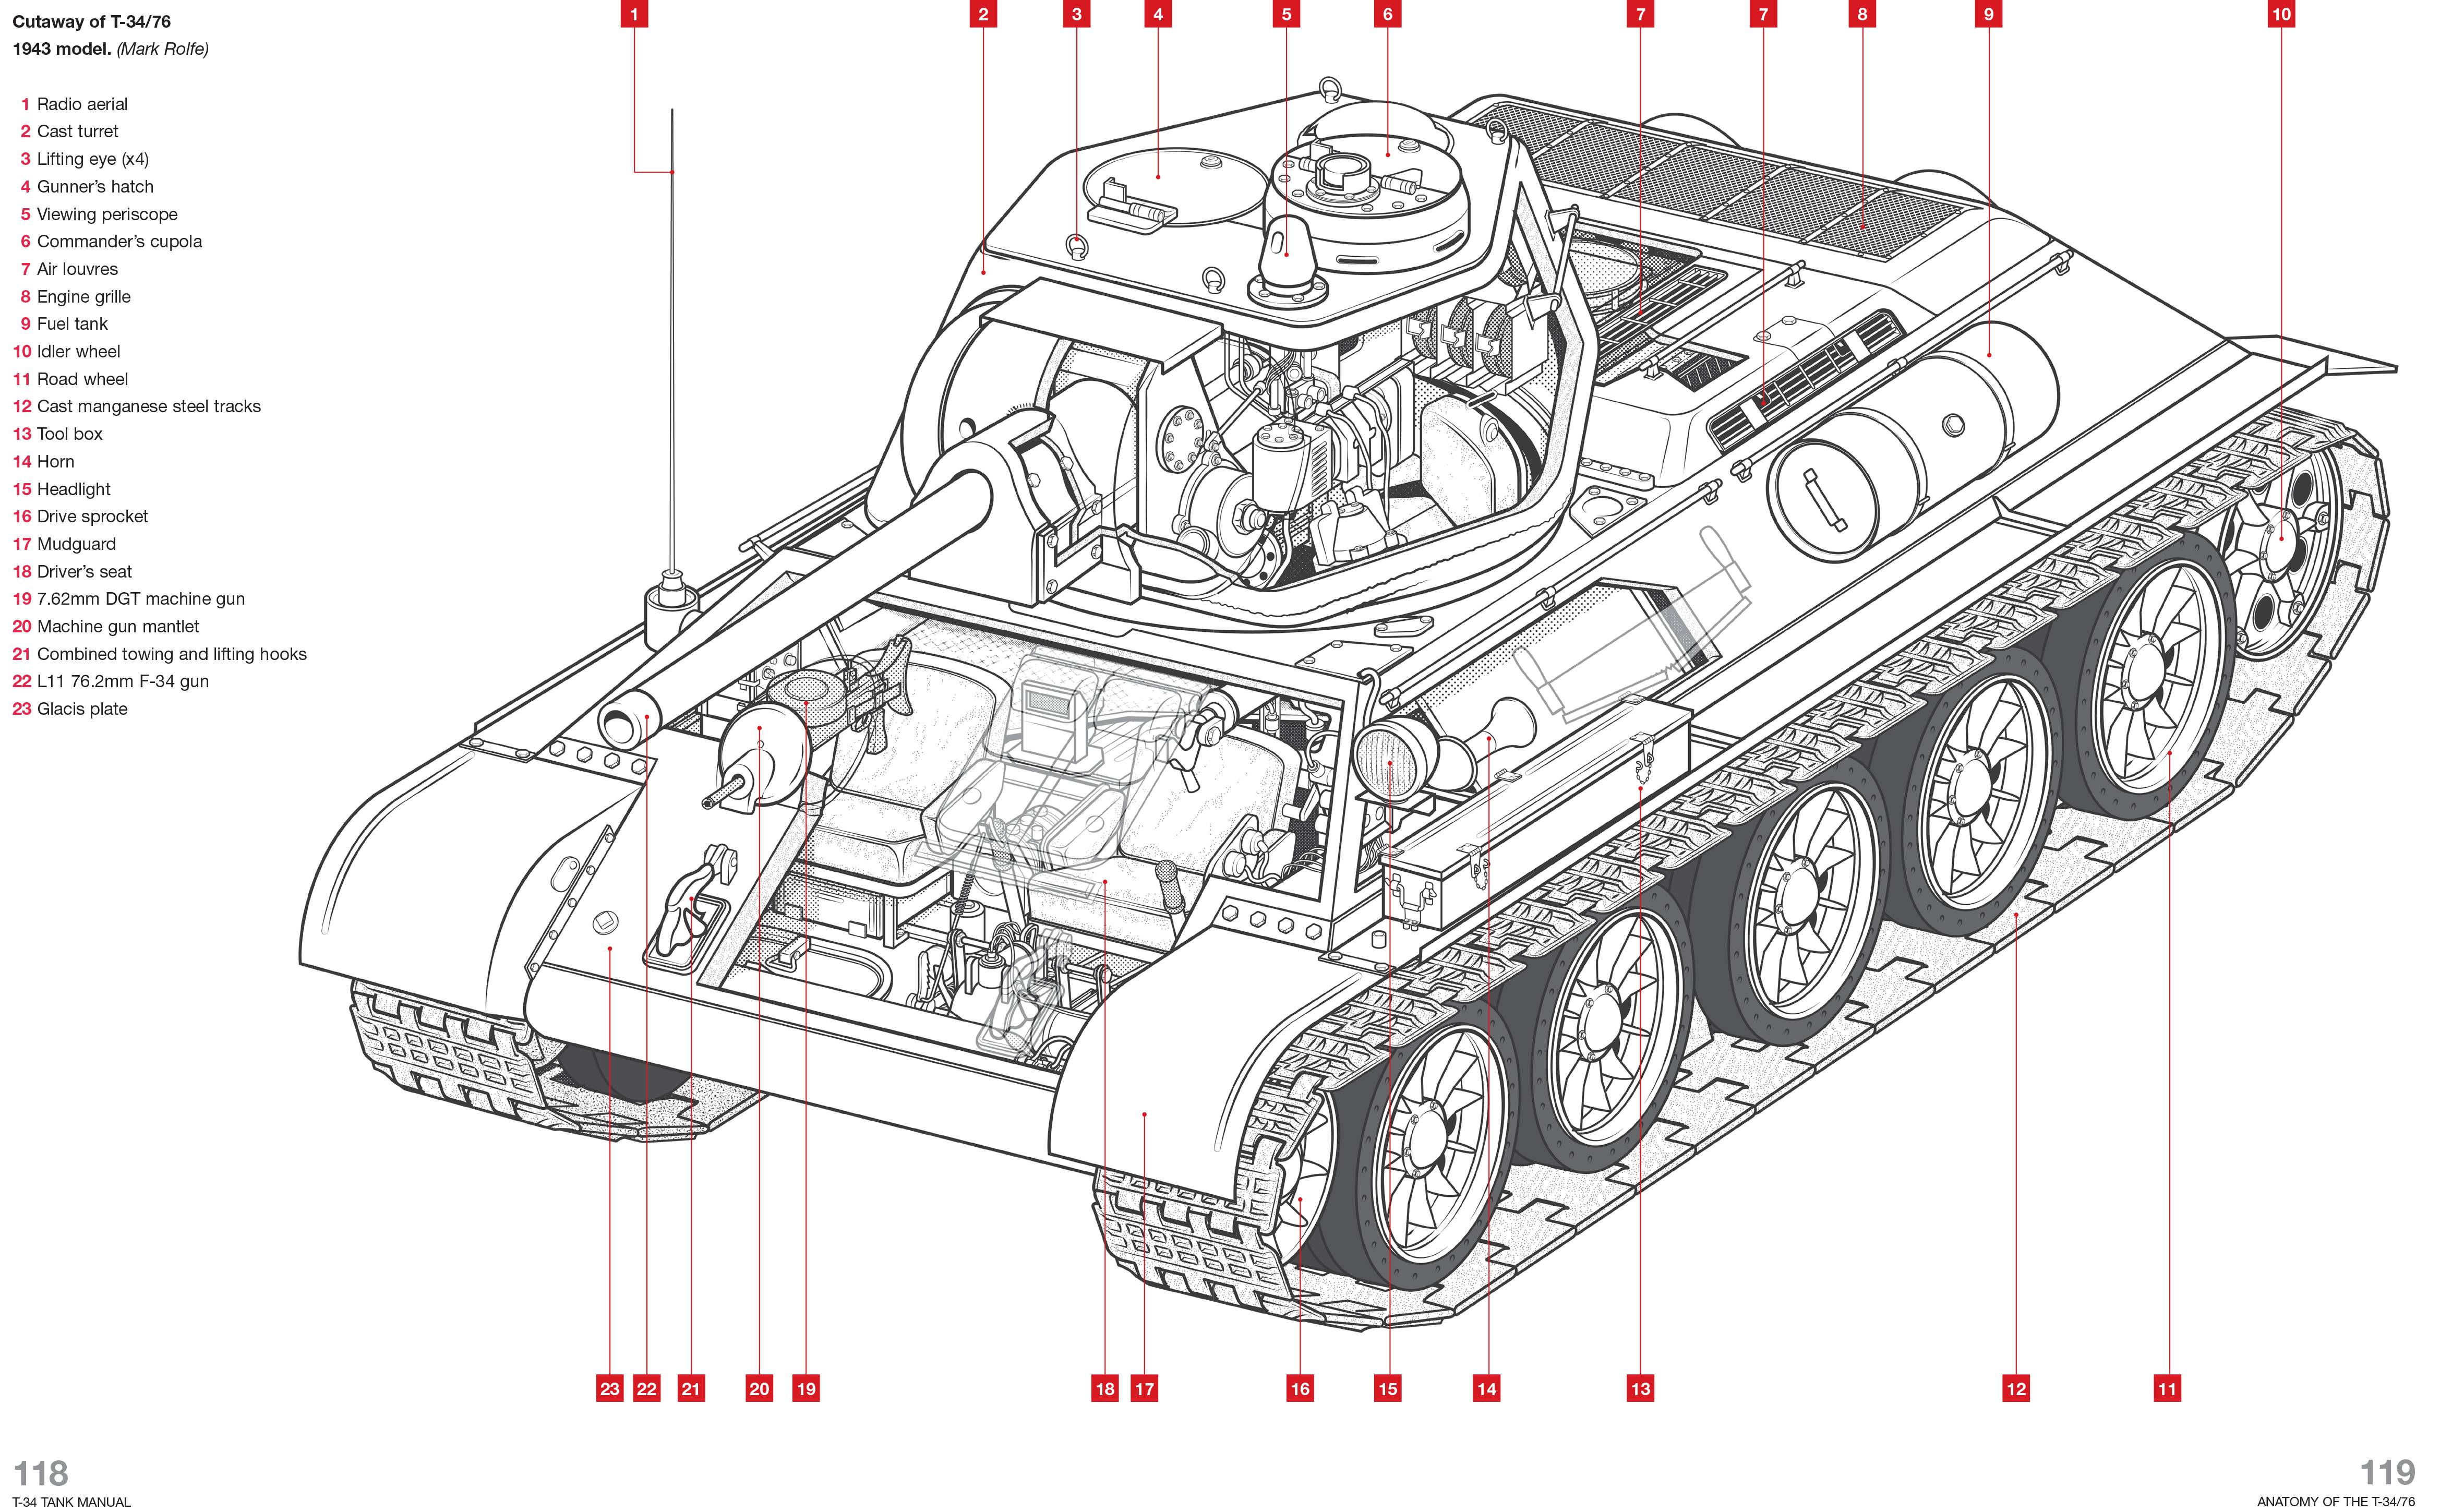 Средний танк т-34м вариант ii — викивоины